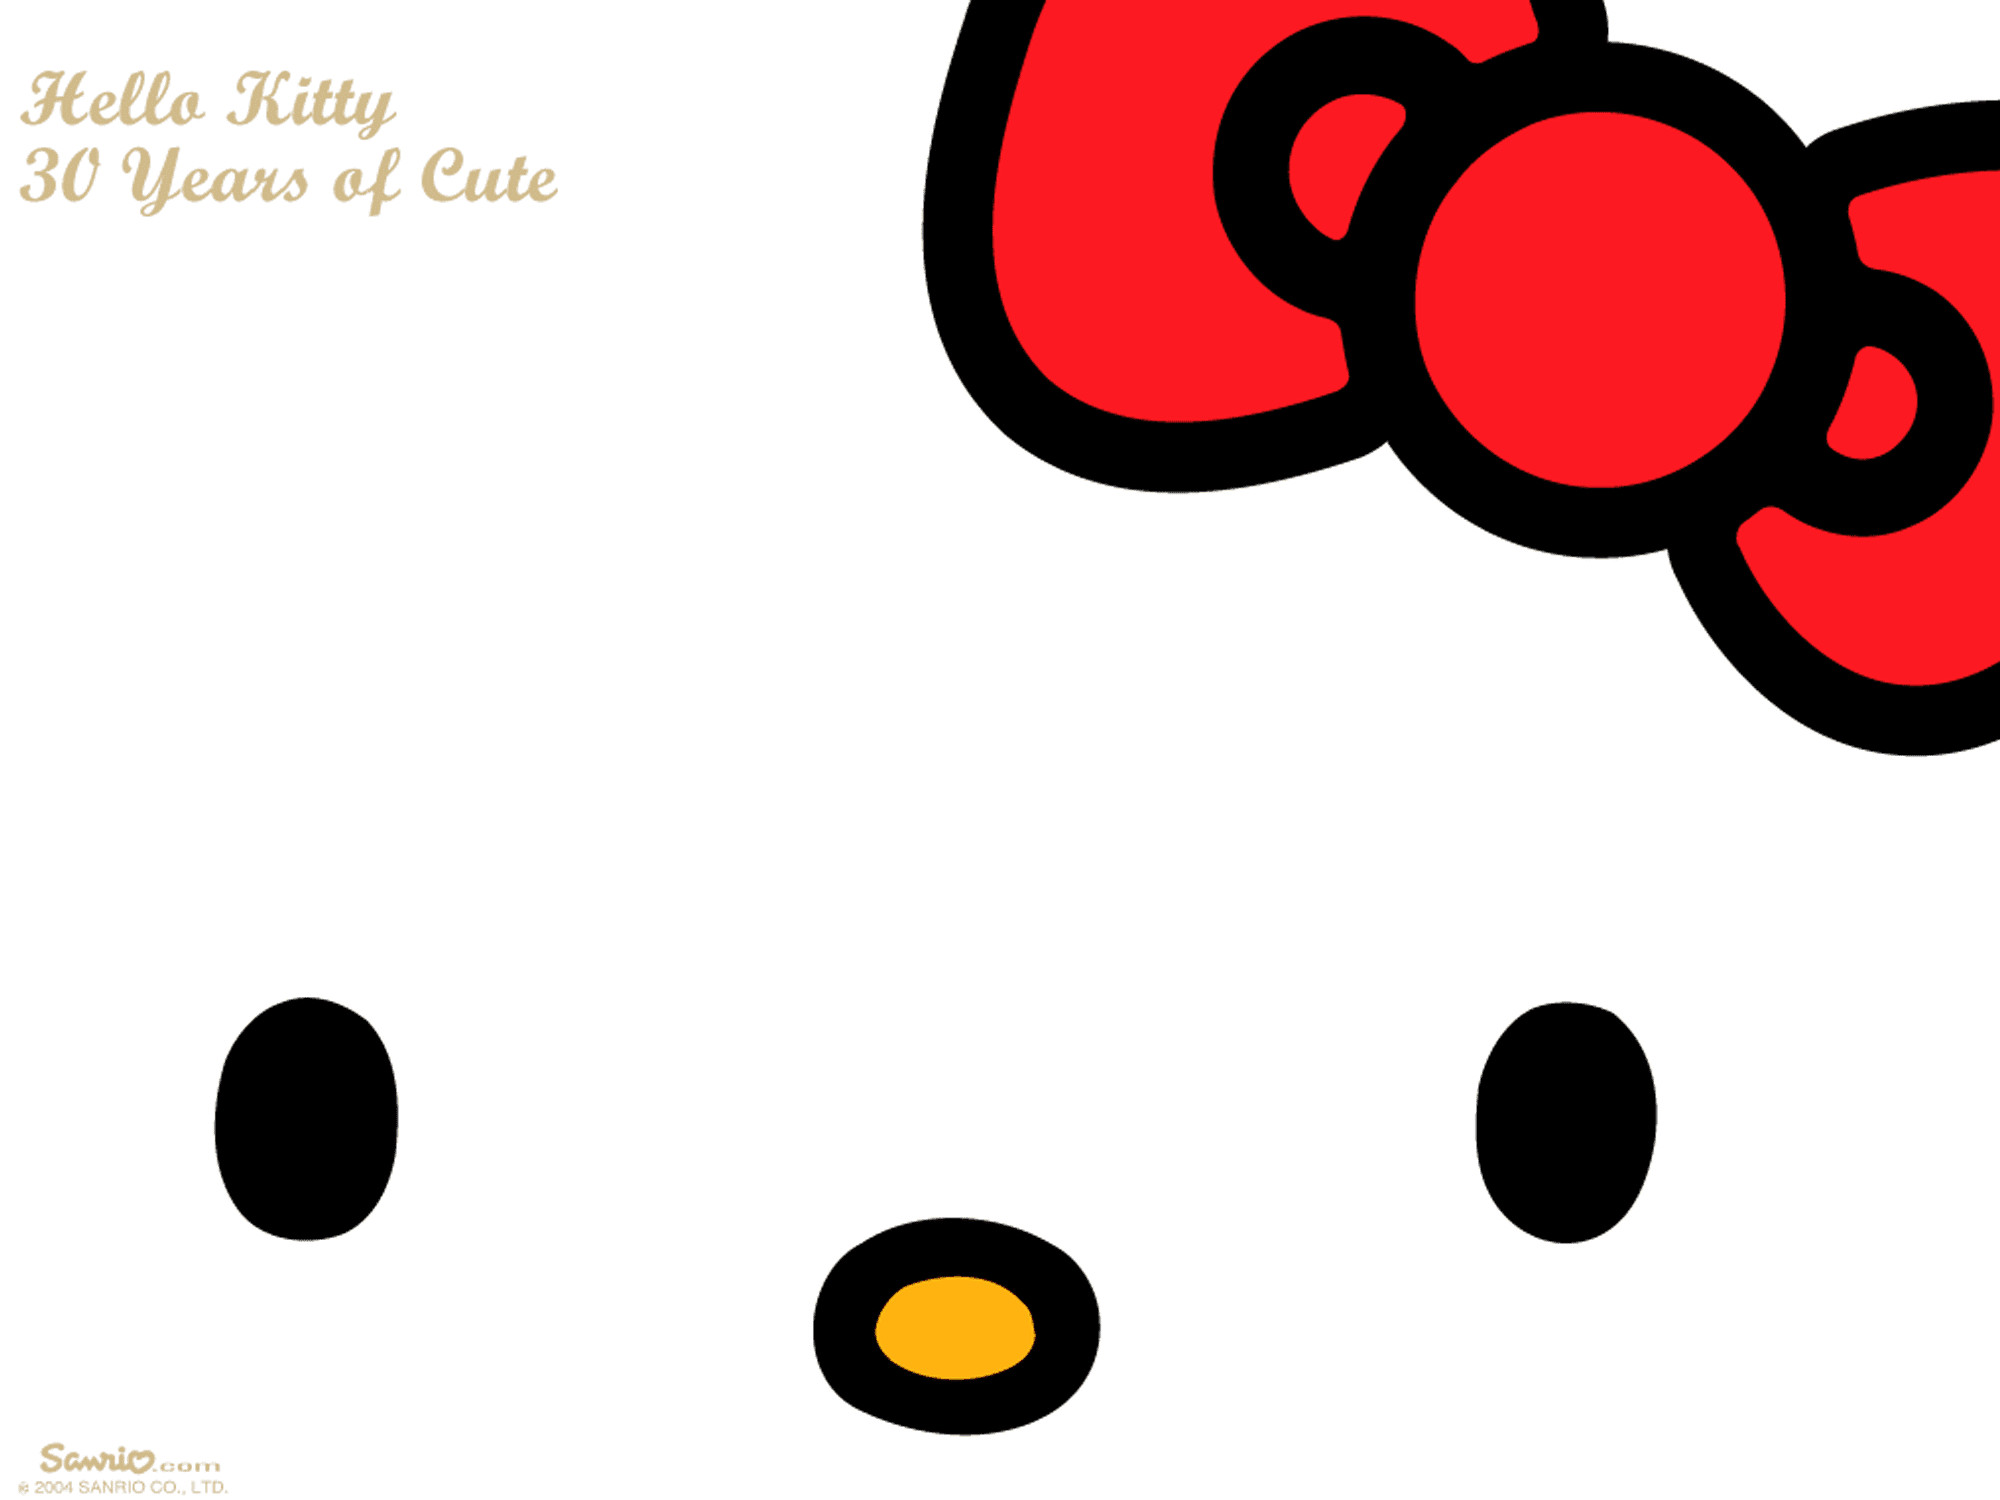 2000x1500 30 Years of Cute Hello Kitty Wallpaper